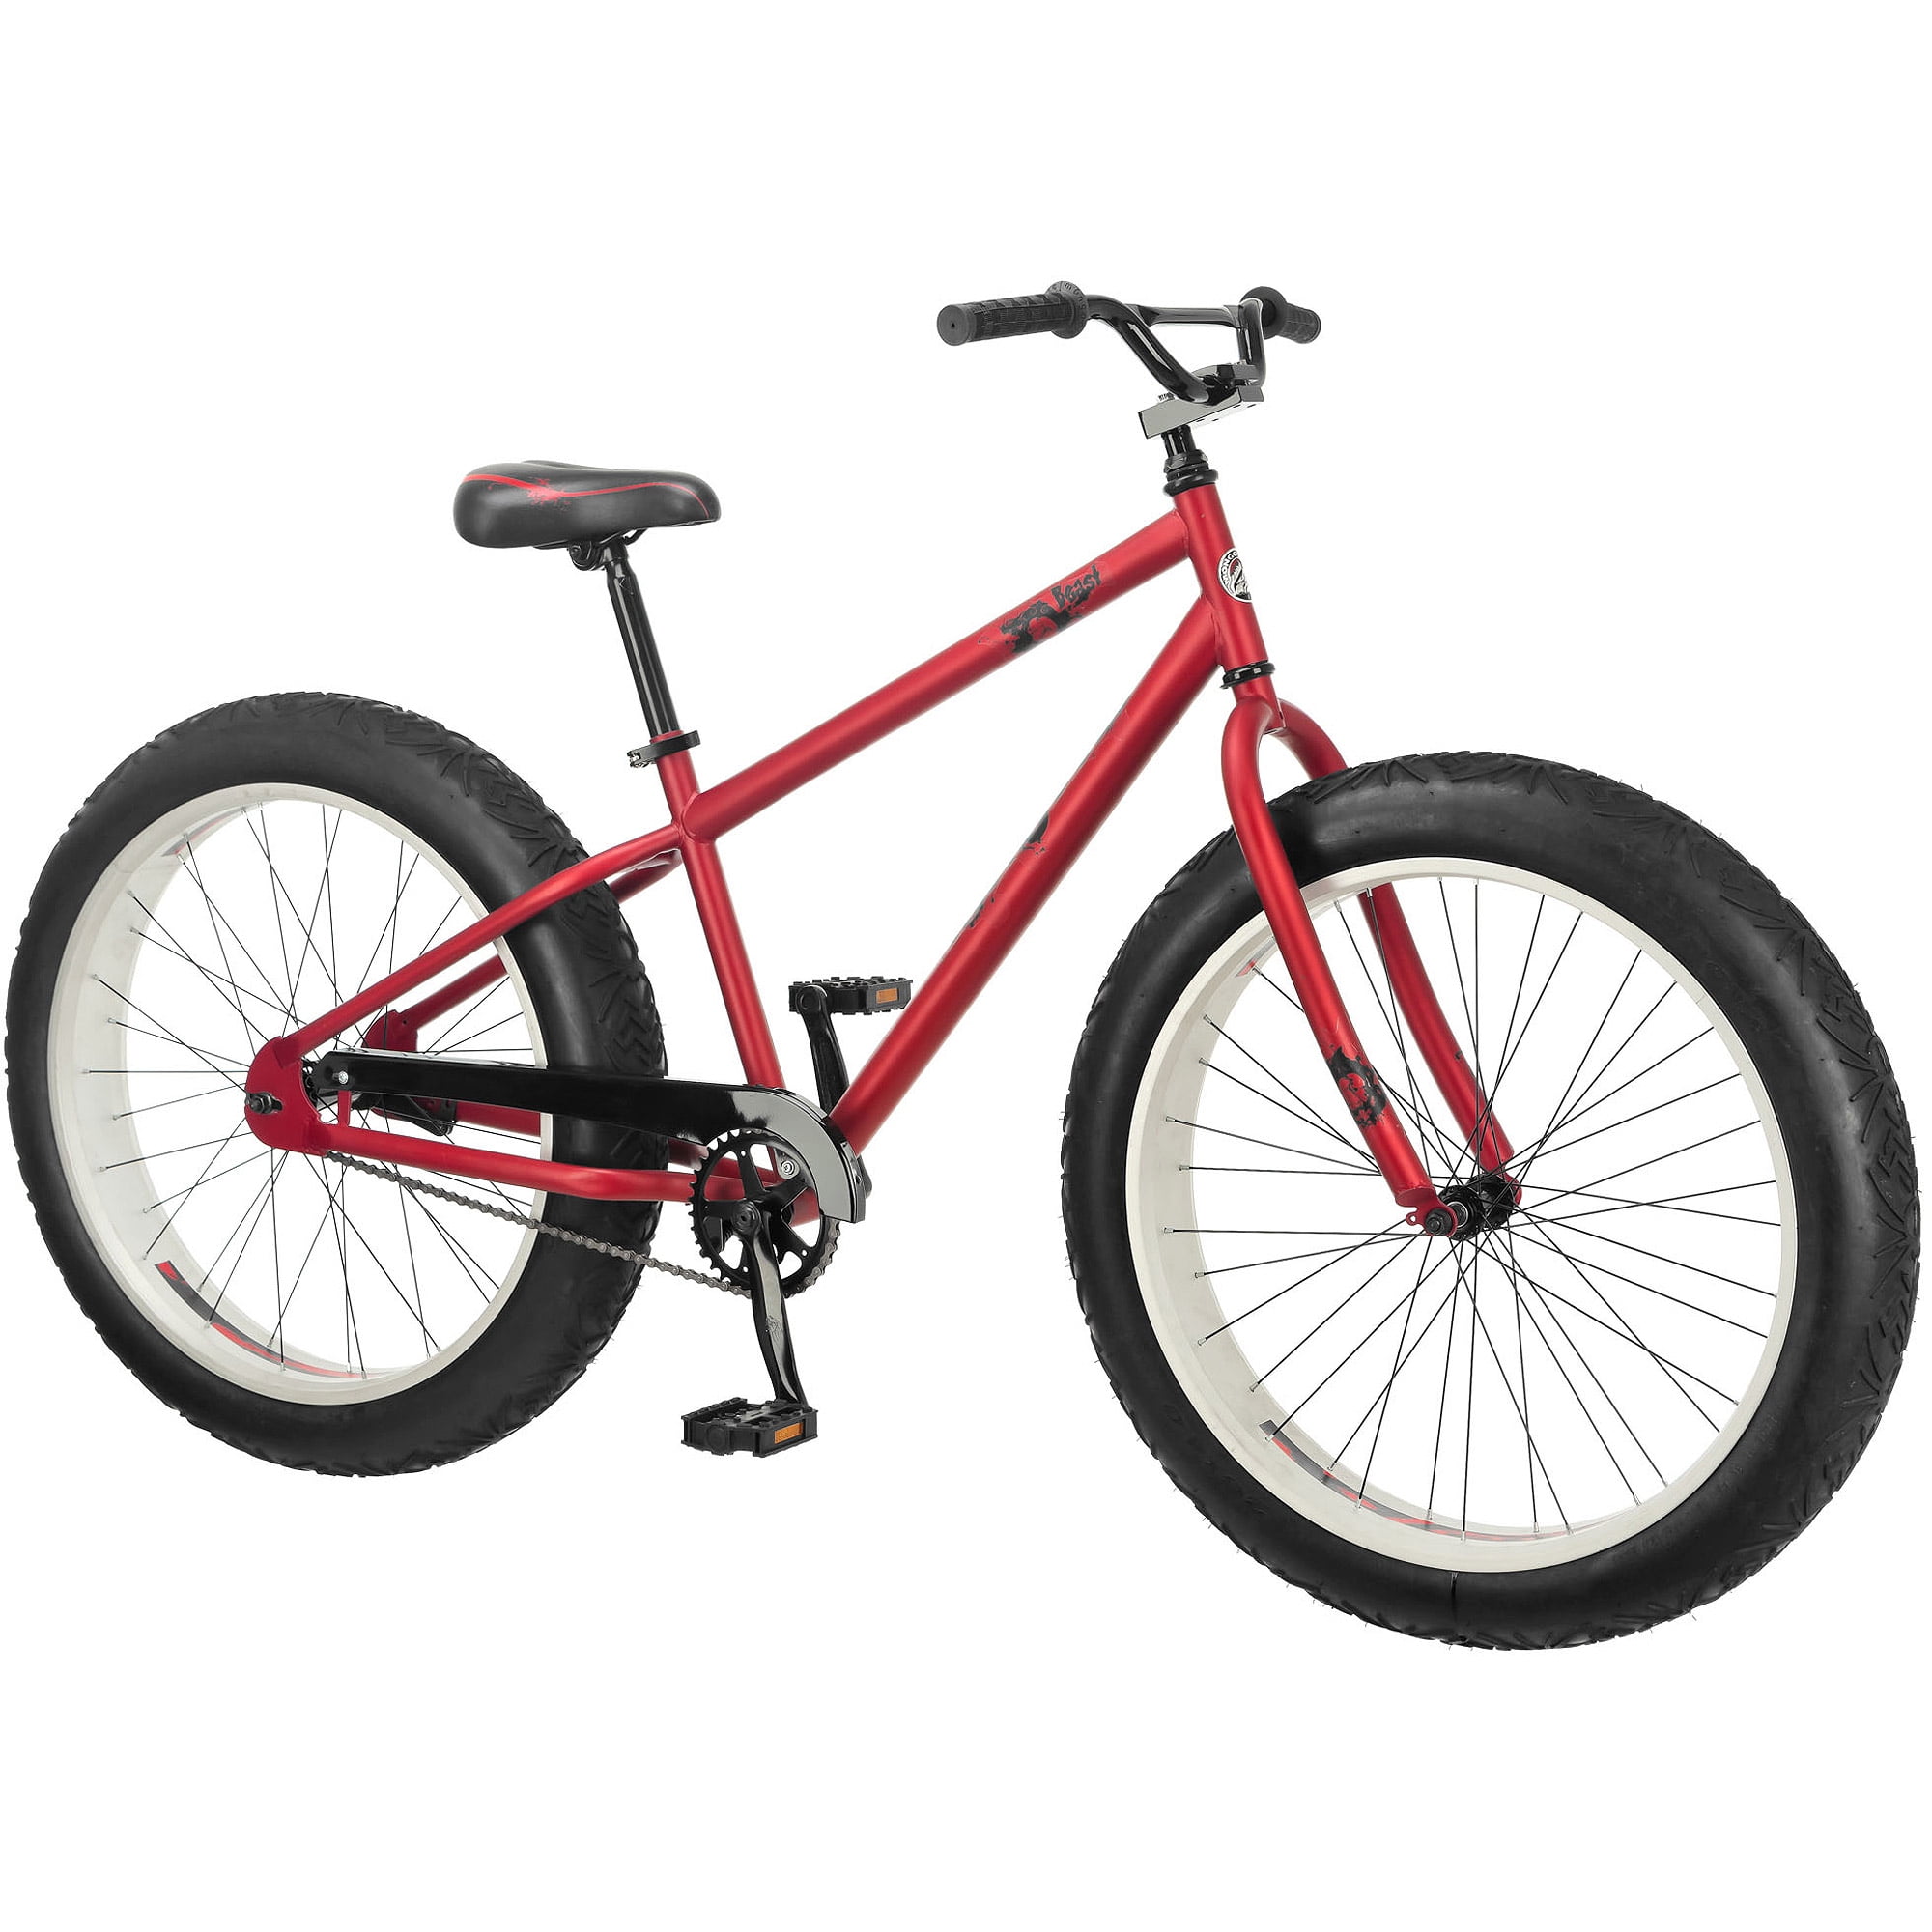 26 inch mongoose bmx bike